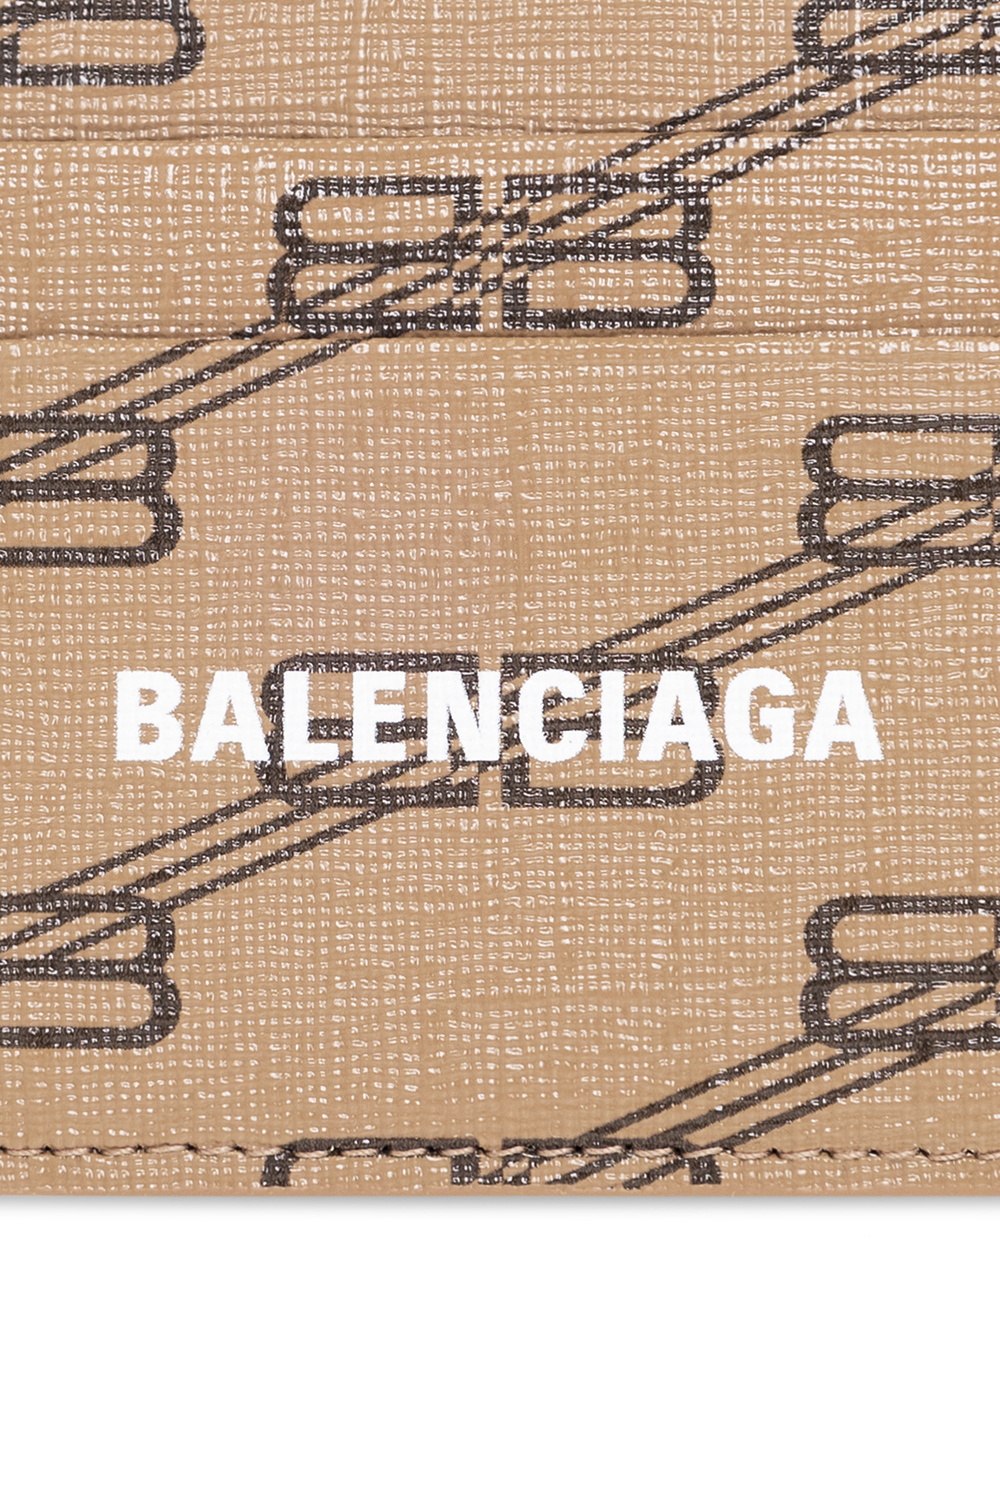 Balenciaga A STEP AHEAD IN STYLISH SHOES